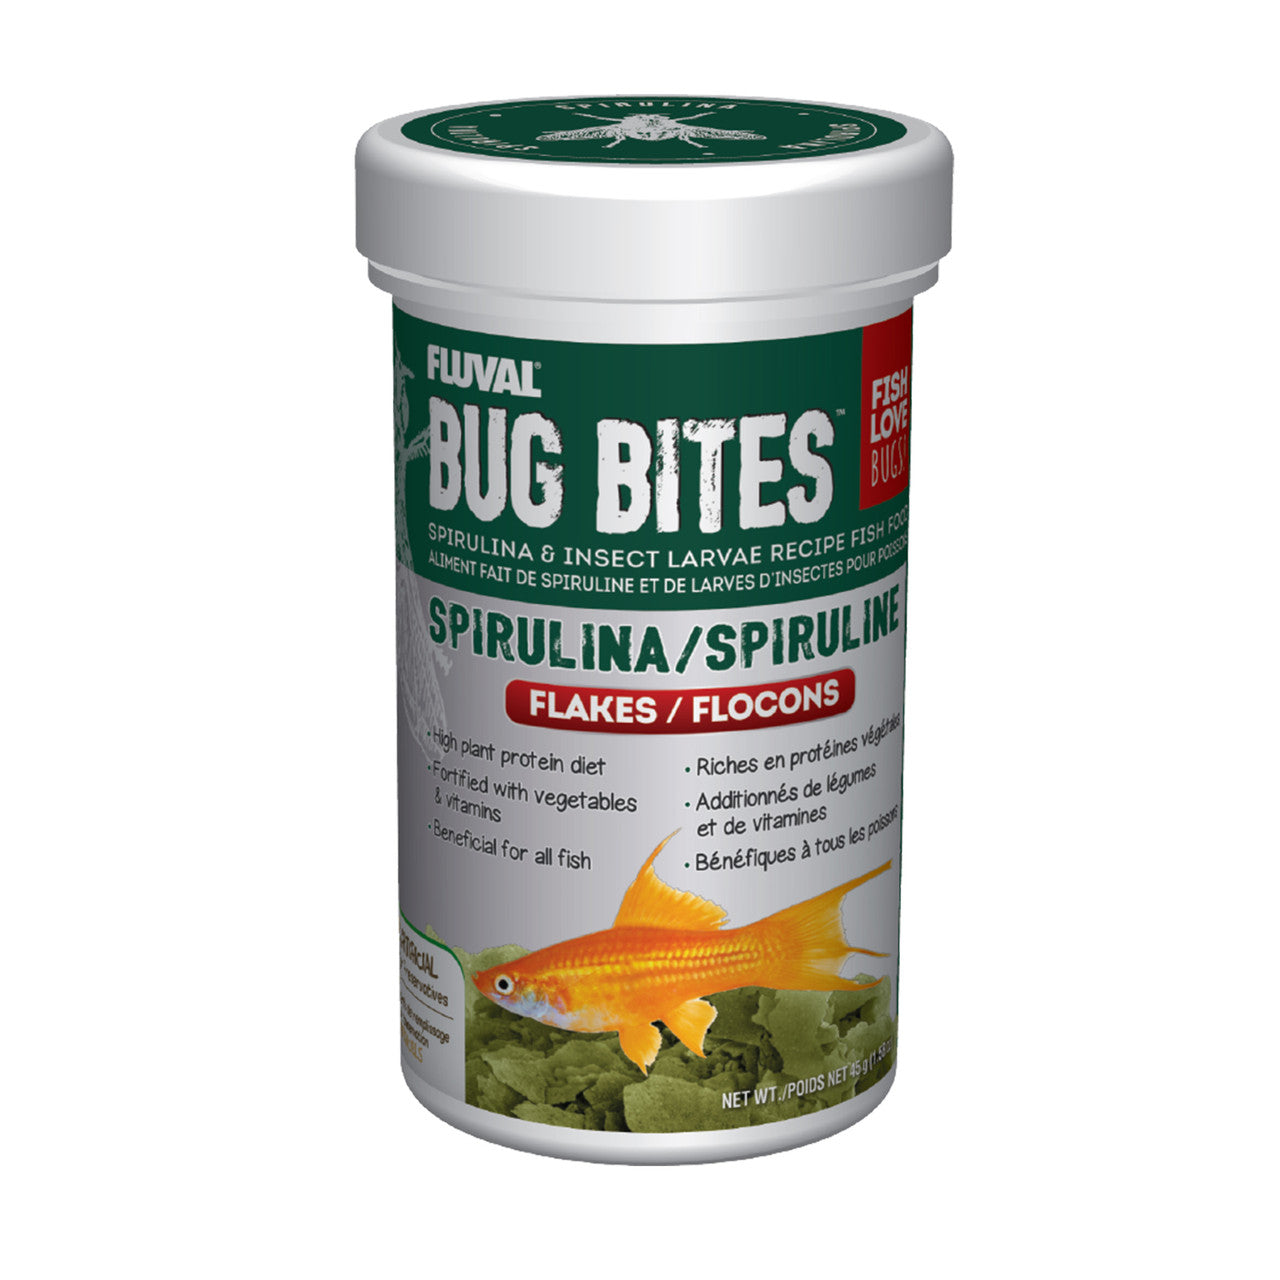 Fluval Bug Bites Spirulina Flakes 1.59 oz 015561173551